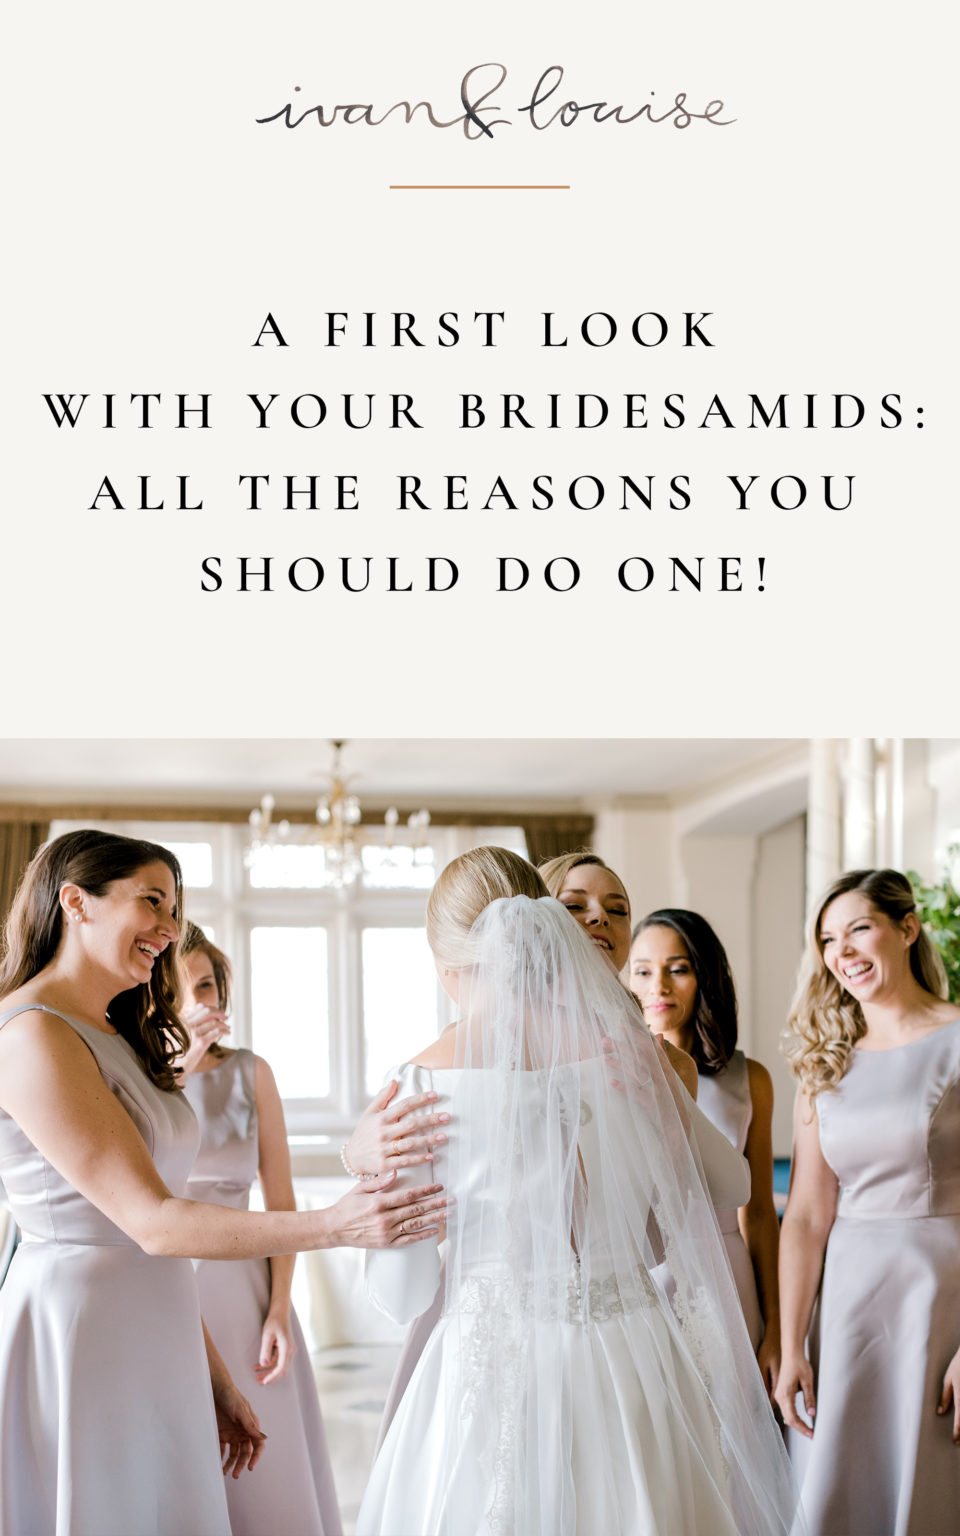 bridesmaid reveal
bridesmaid first look
